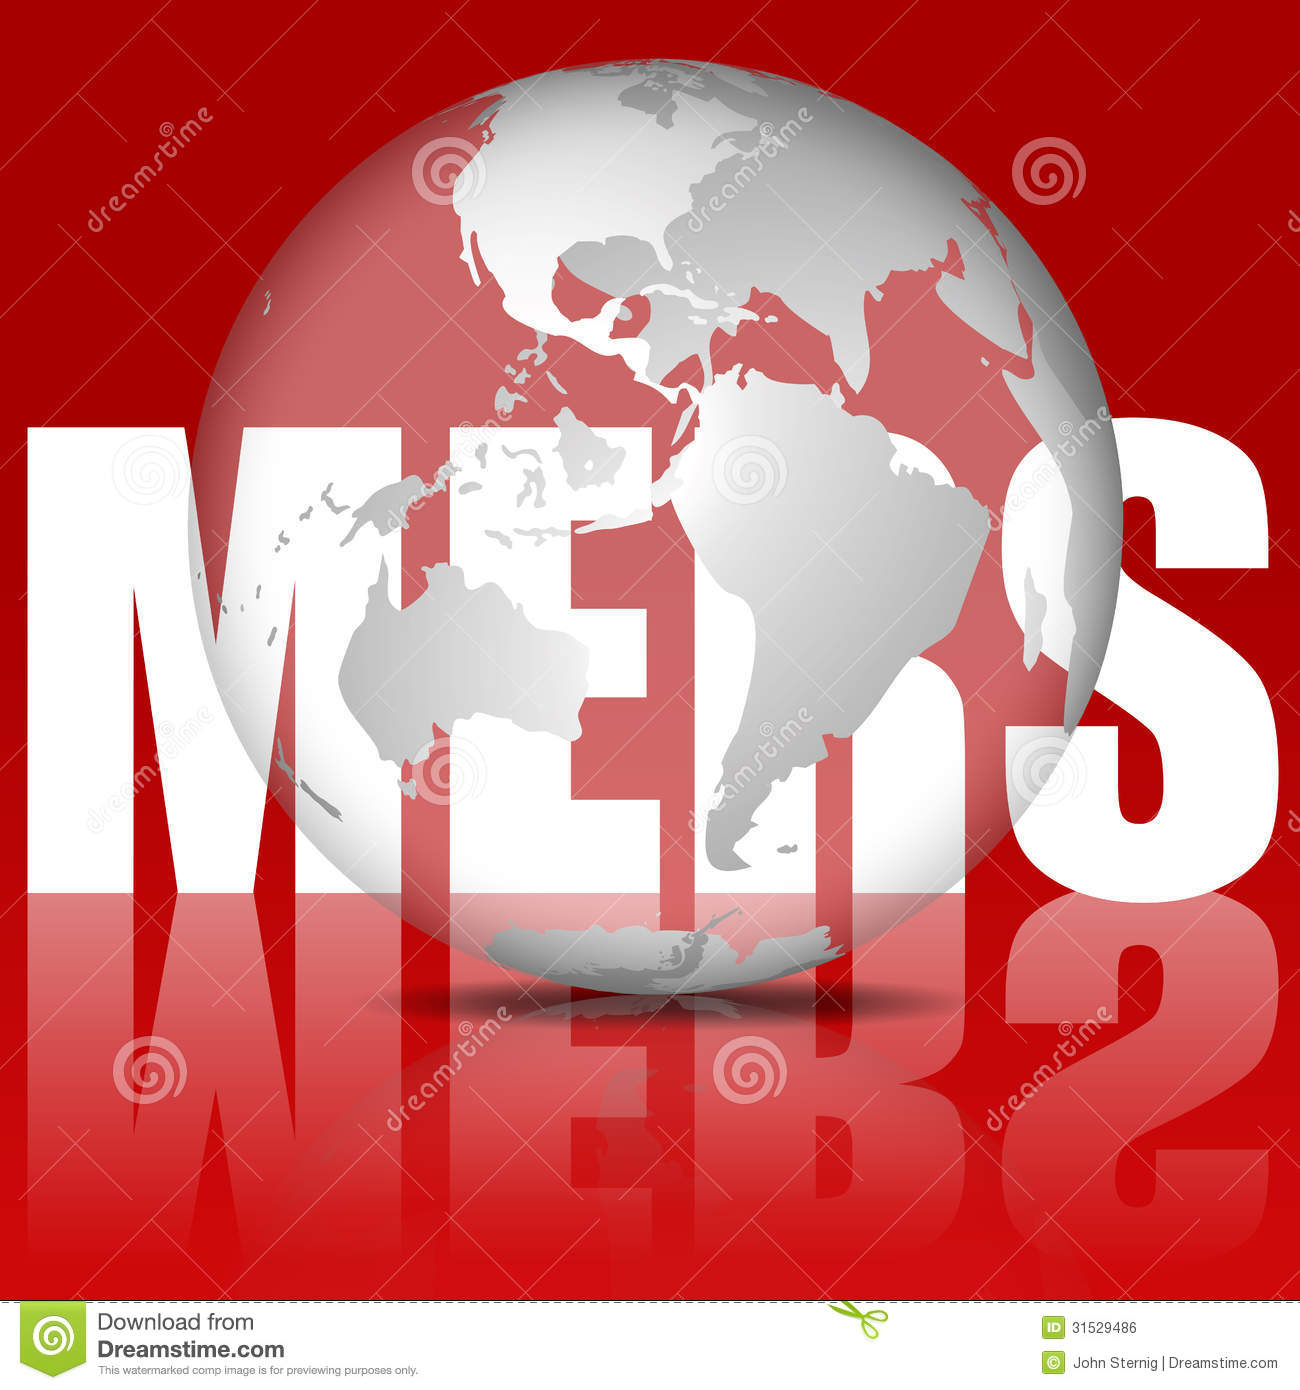 mers virus illustration globe middle east respiratory syndrome coronavirus 31529486 | Korea | [ชวนคุยยามเช้า] ว่าด้วยเรื่อง M E R S ฉบับย่อพร้อมการรับมือ 5 นาทีจบ